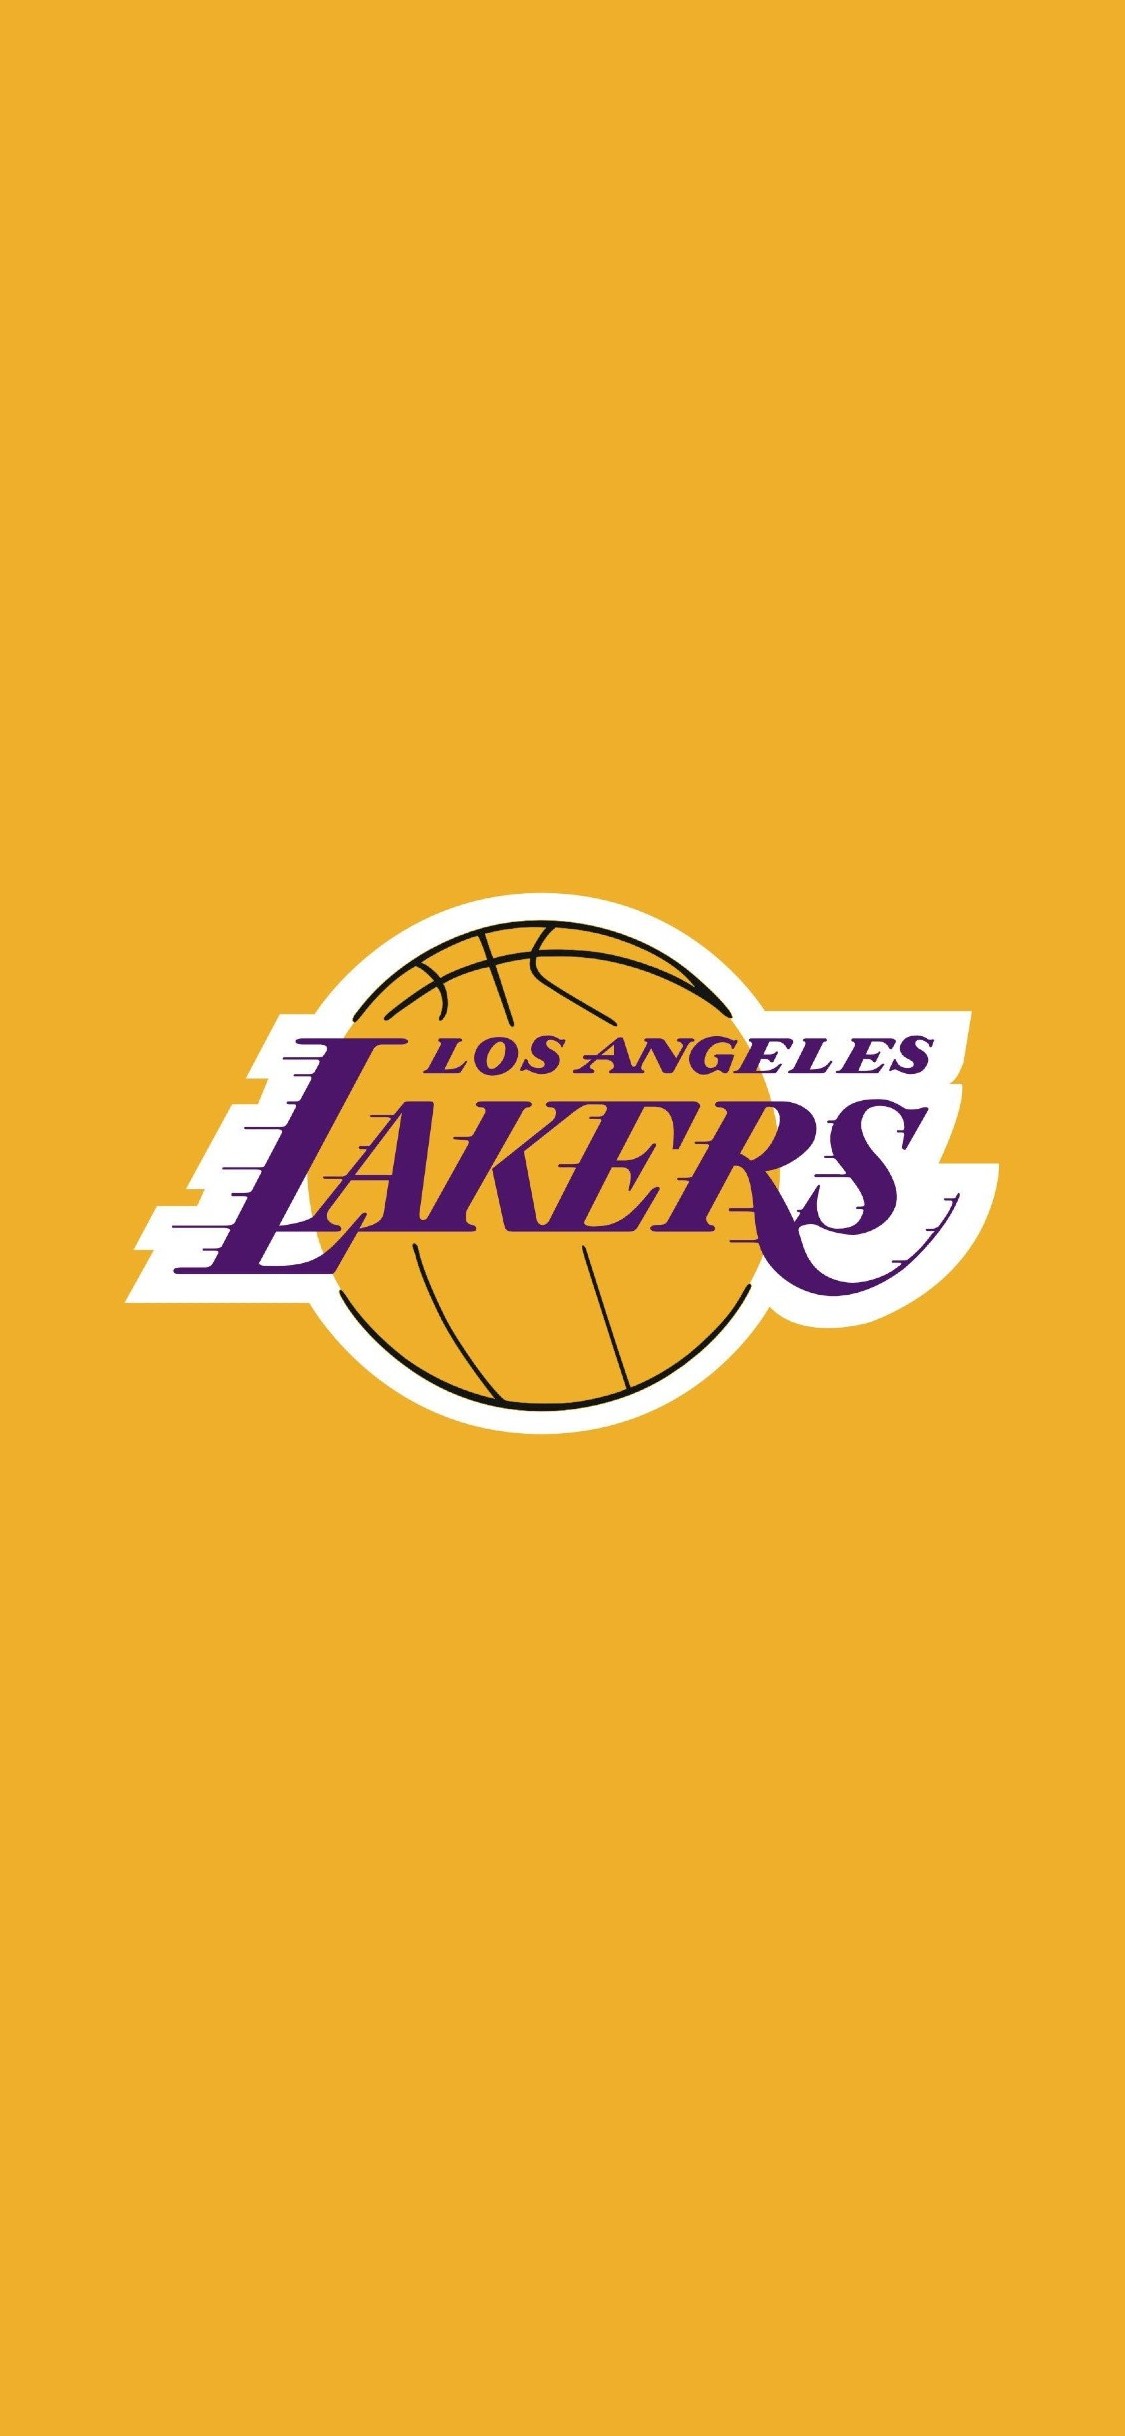 Los Angeles Lakers バスケ Iphone Xs 壁紙 待ち受け Sumaran